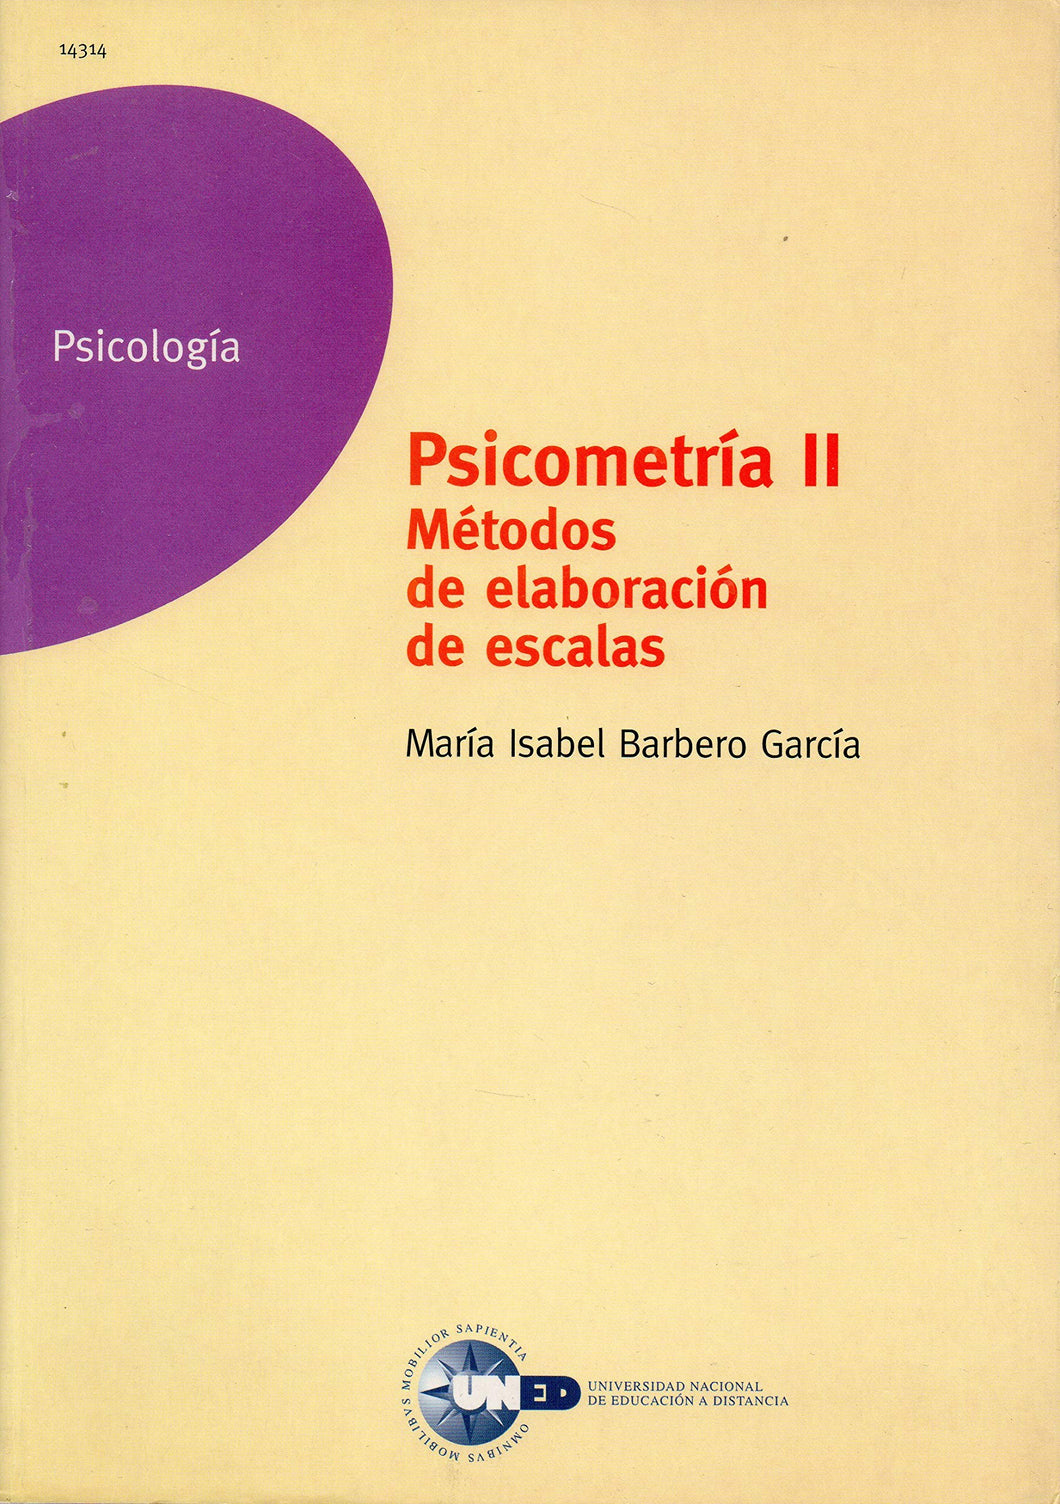 Psicometria II: methods of elaboration of scales Paperback – June 1, 2000 (good second hand) Book